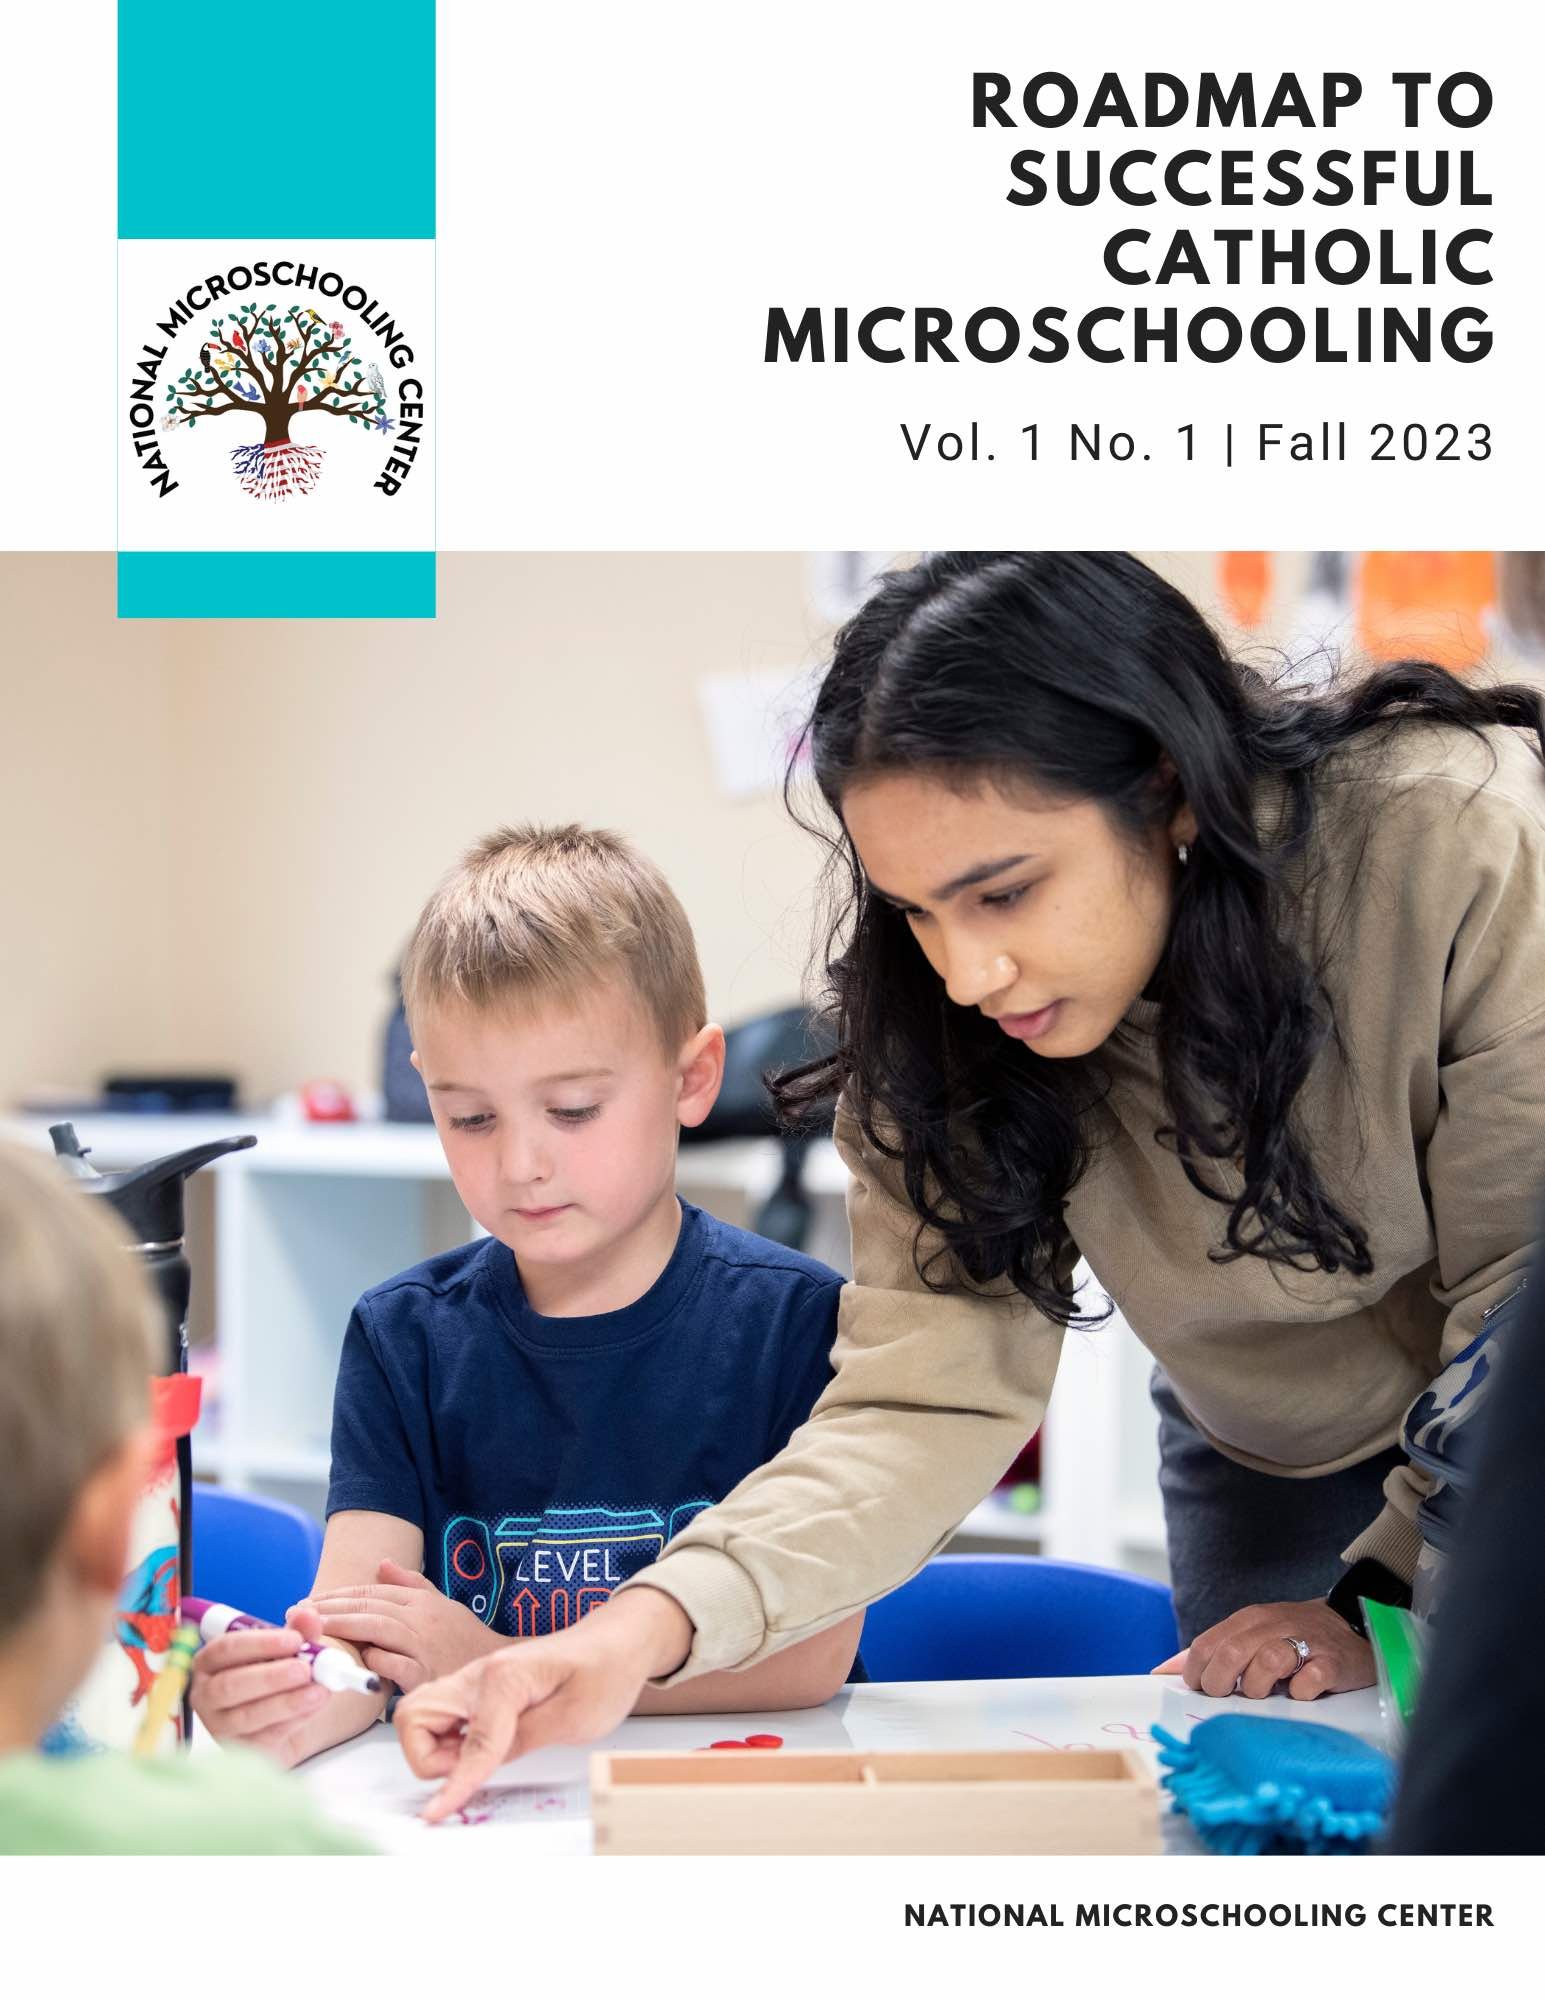 DRAFT Catholic Microschooling Roadmap